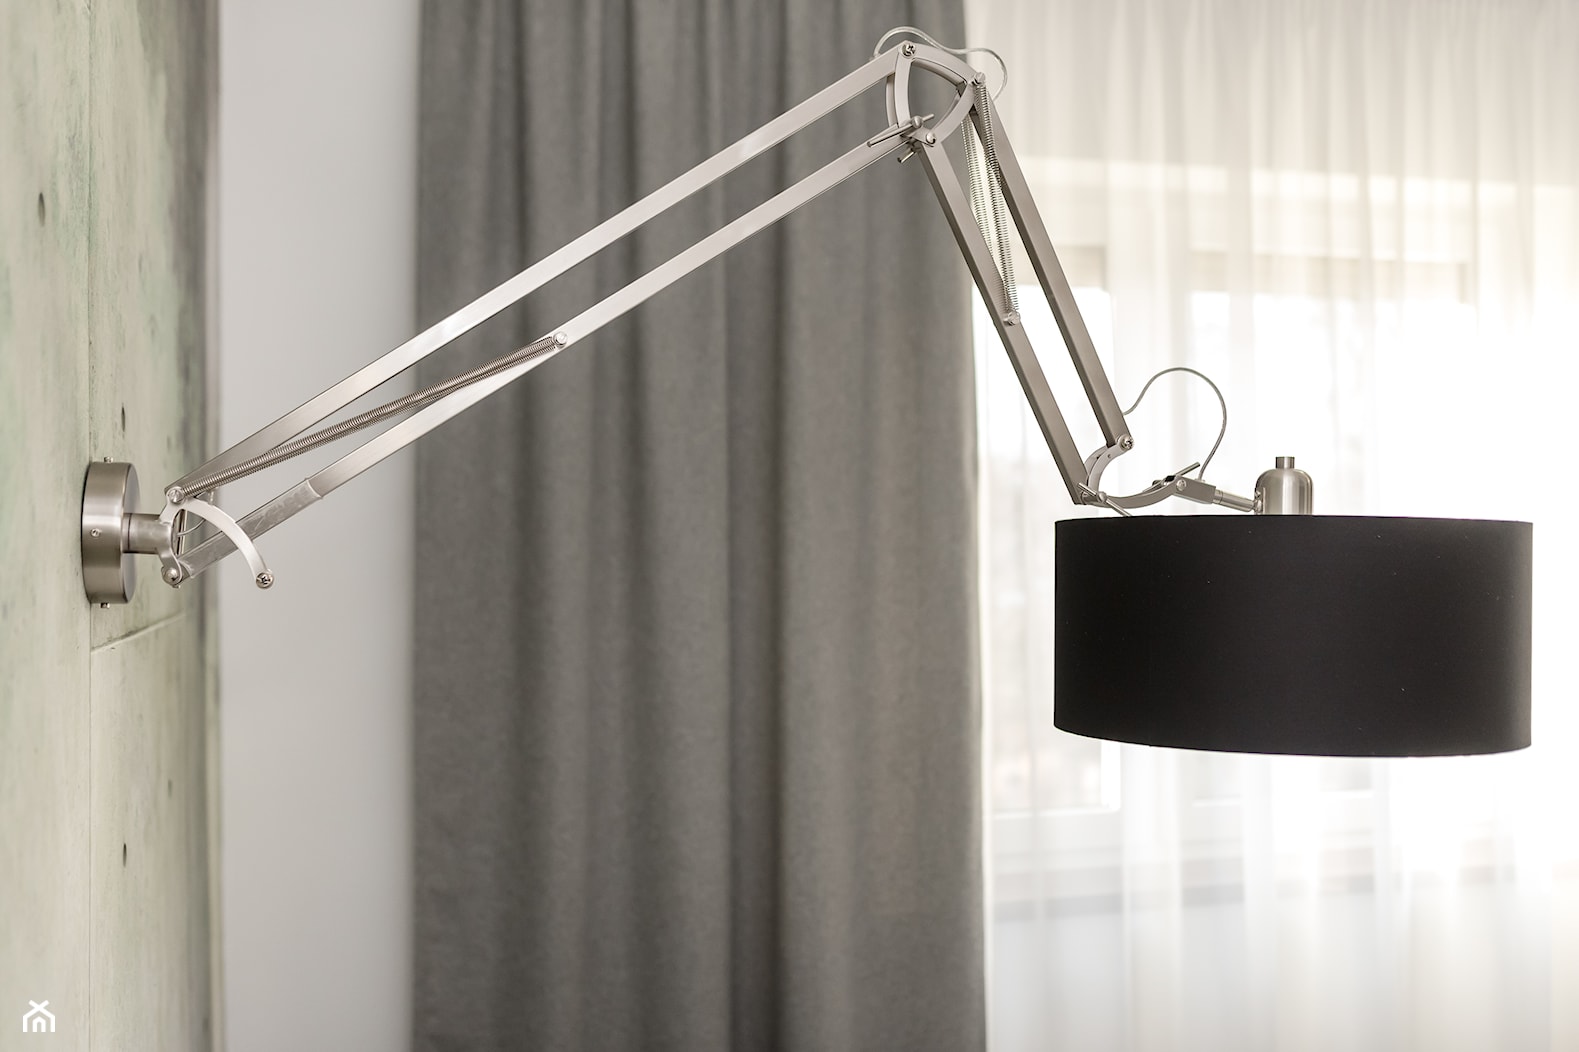 Lampa na ramieniu - zdjęcie od Active Design - Homebook